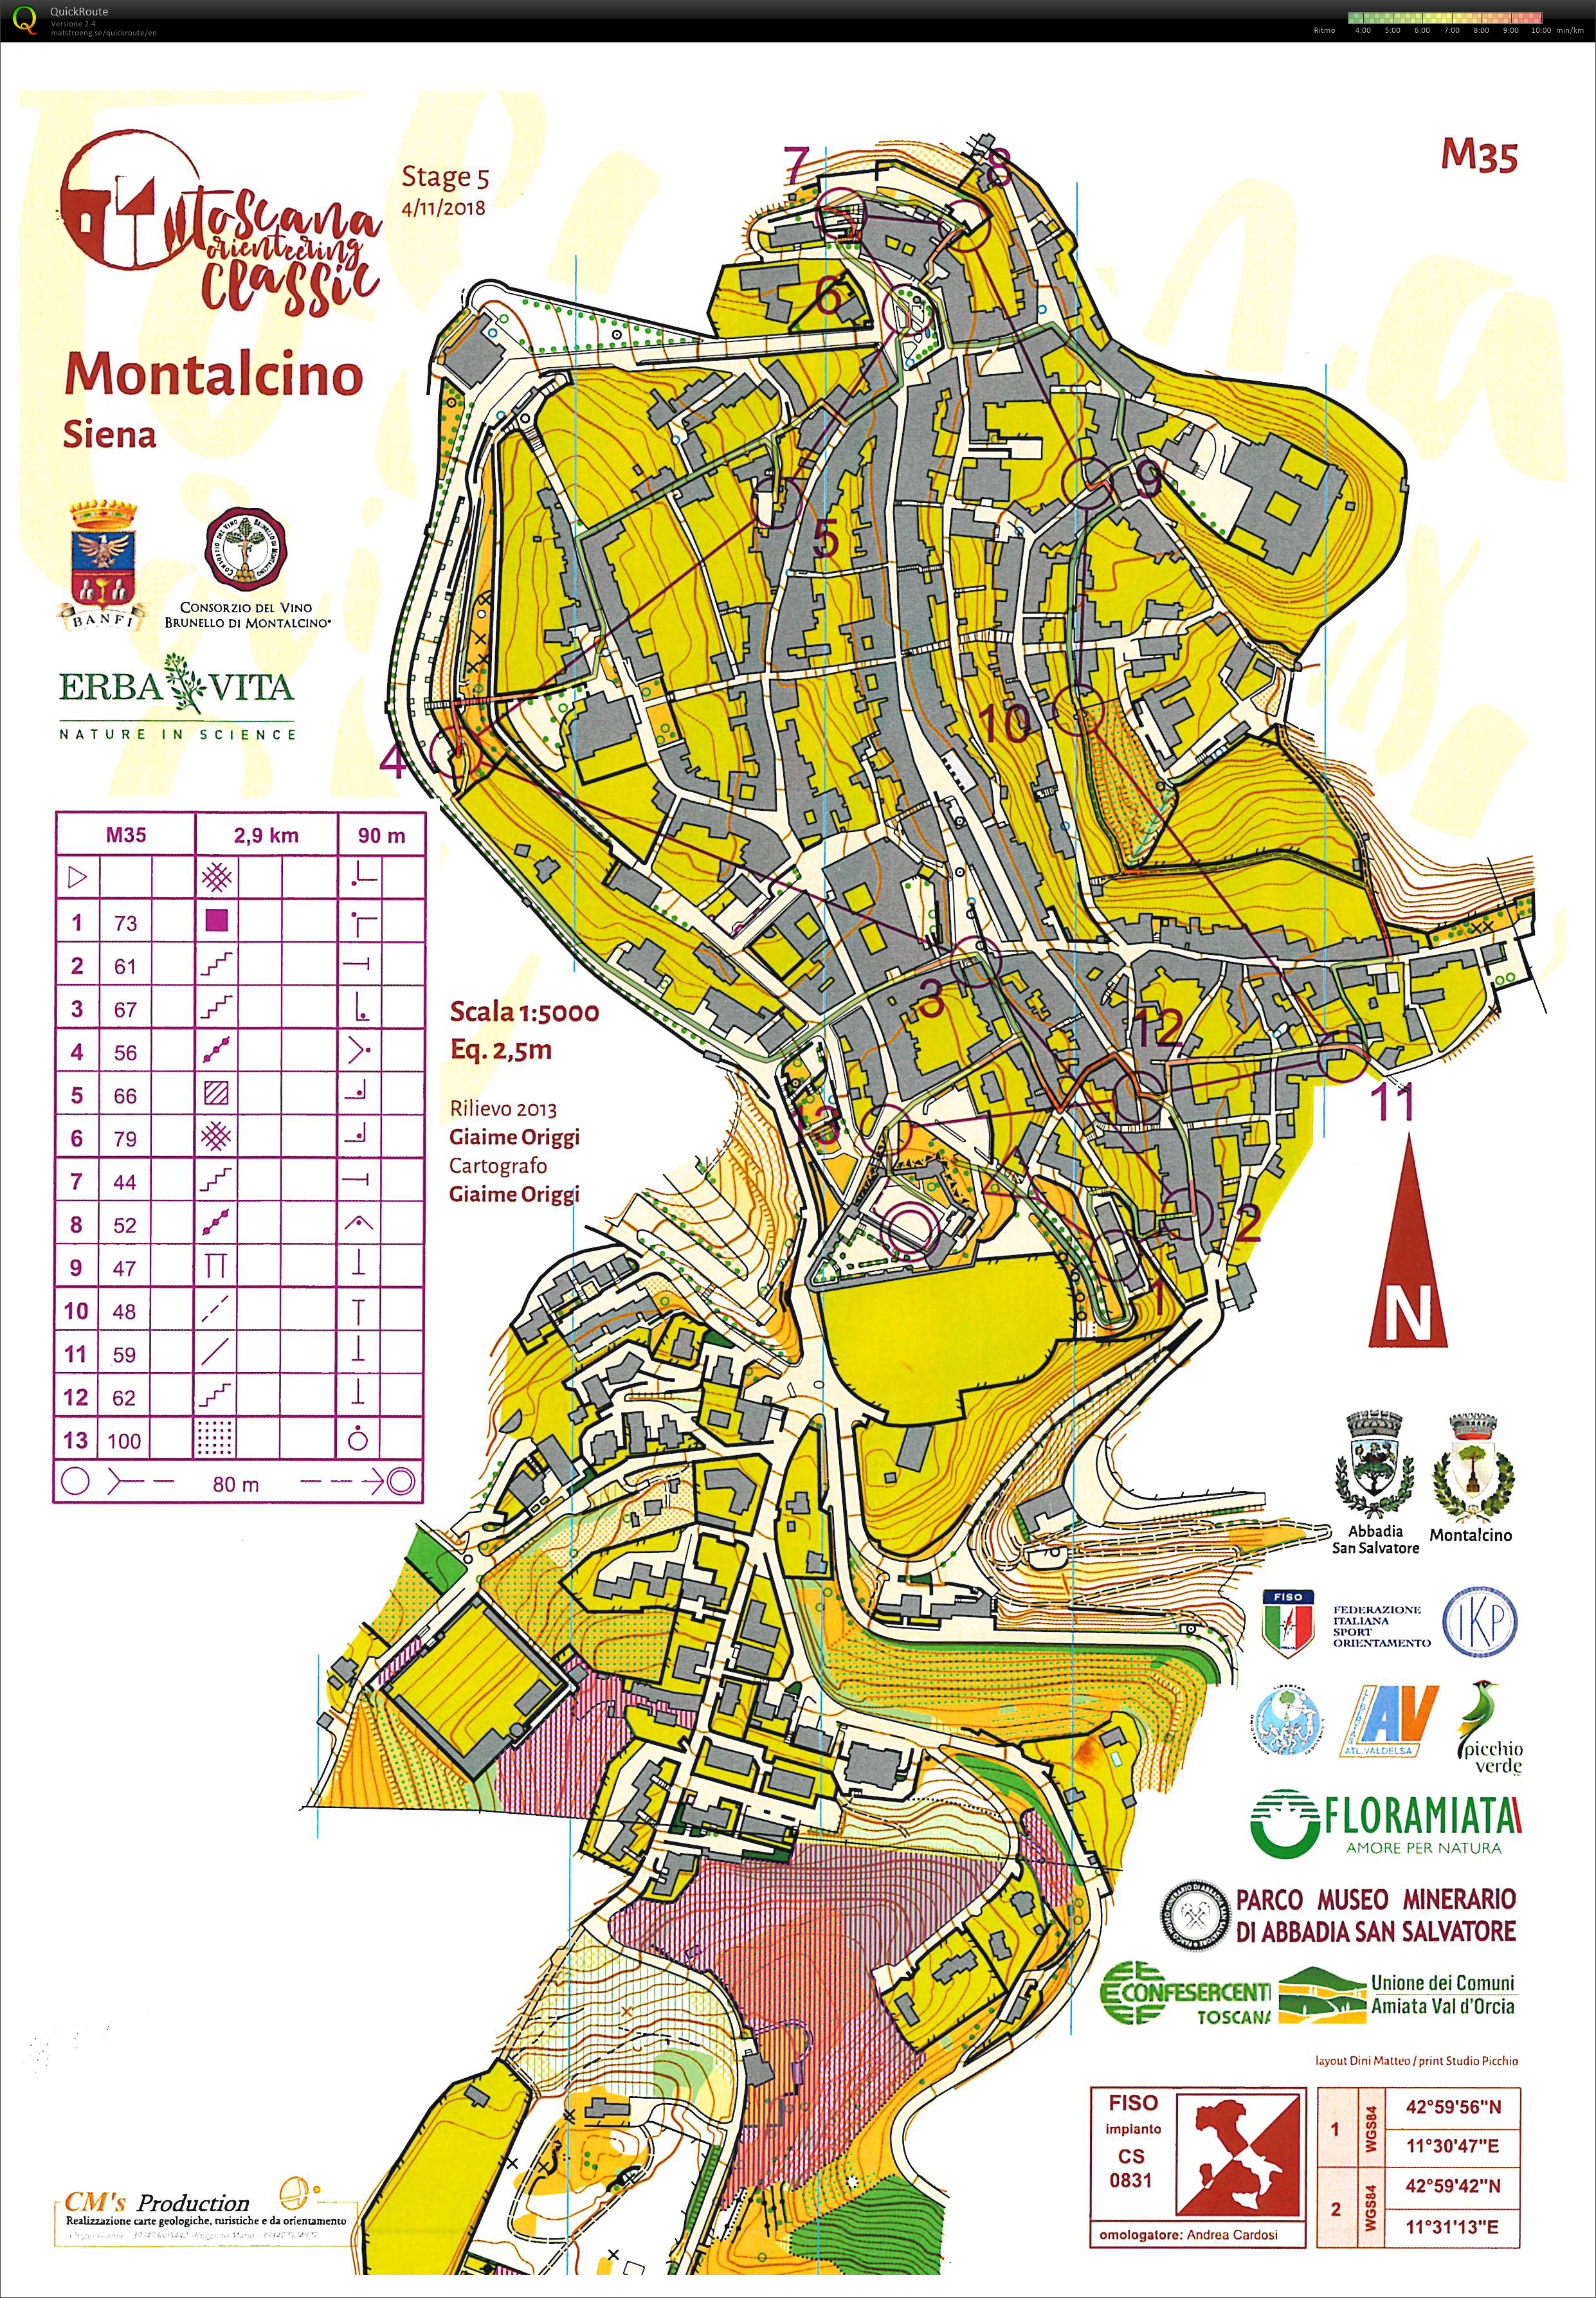 Coppa Italia - 8^ prova (sprint) / Sprint Race Tour - 5^ prova (04-11-2018)